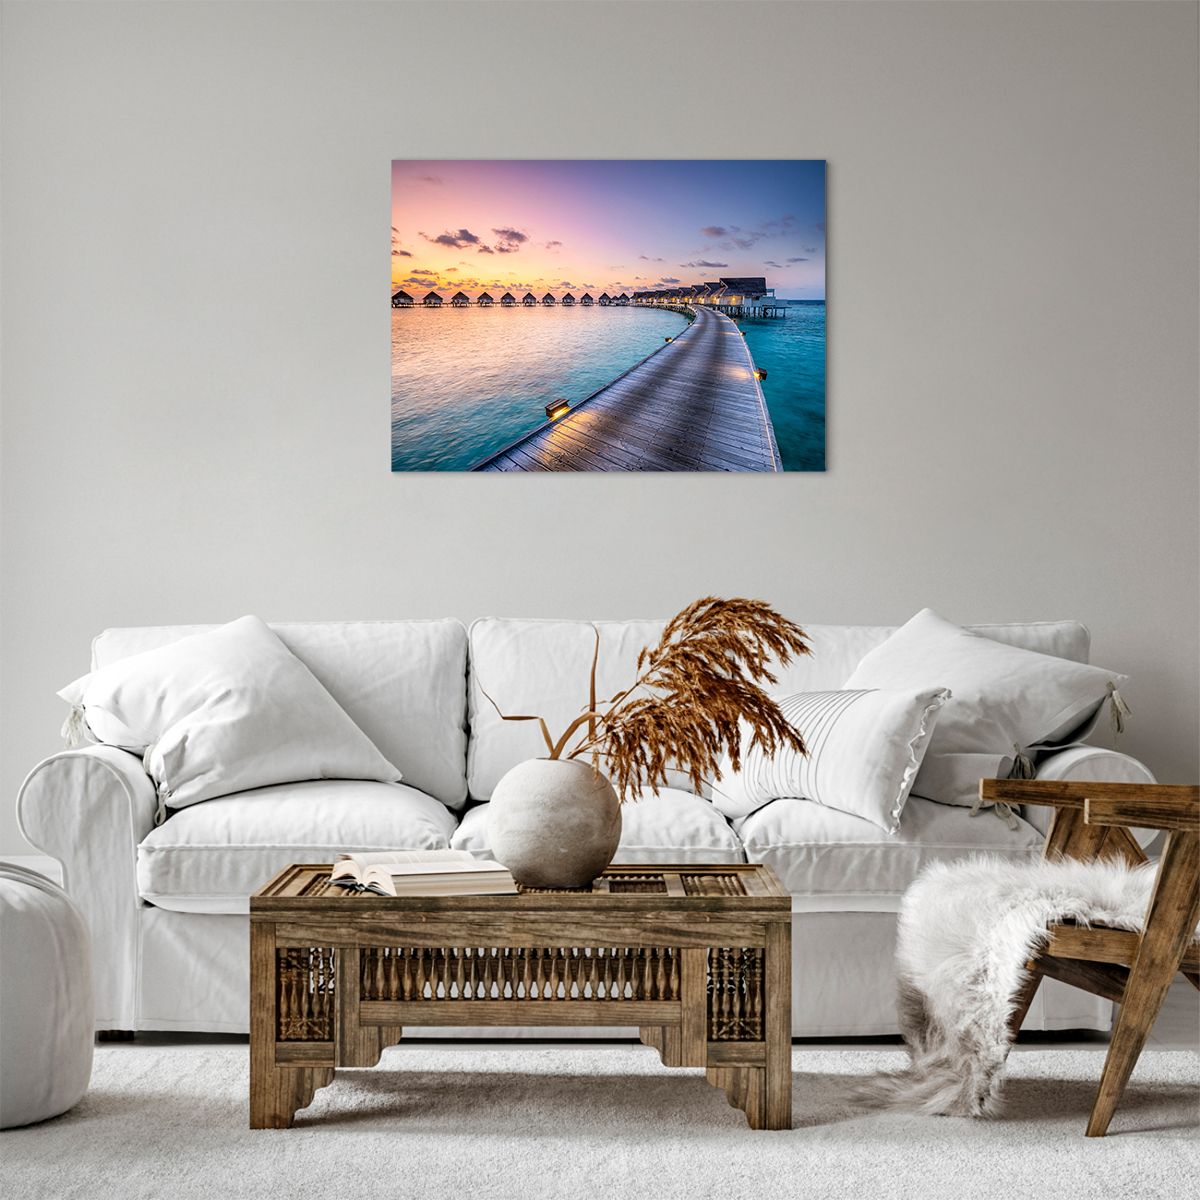 Bild auf Leinwand Malediven, Bild auf Leinwand Landschaft, Bild auf Leinwand Reisen, Bild auf Leinwand Meer, Bild auf Leinwand Der Sonnenuntergang